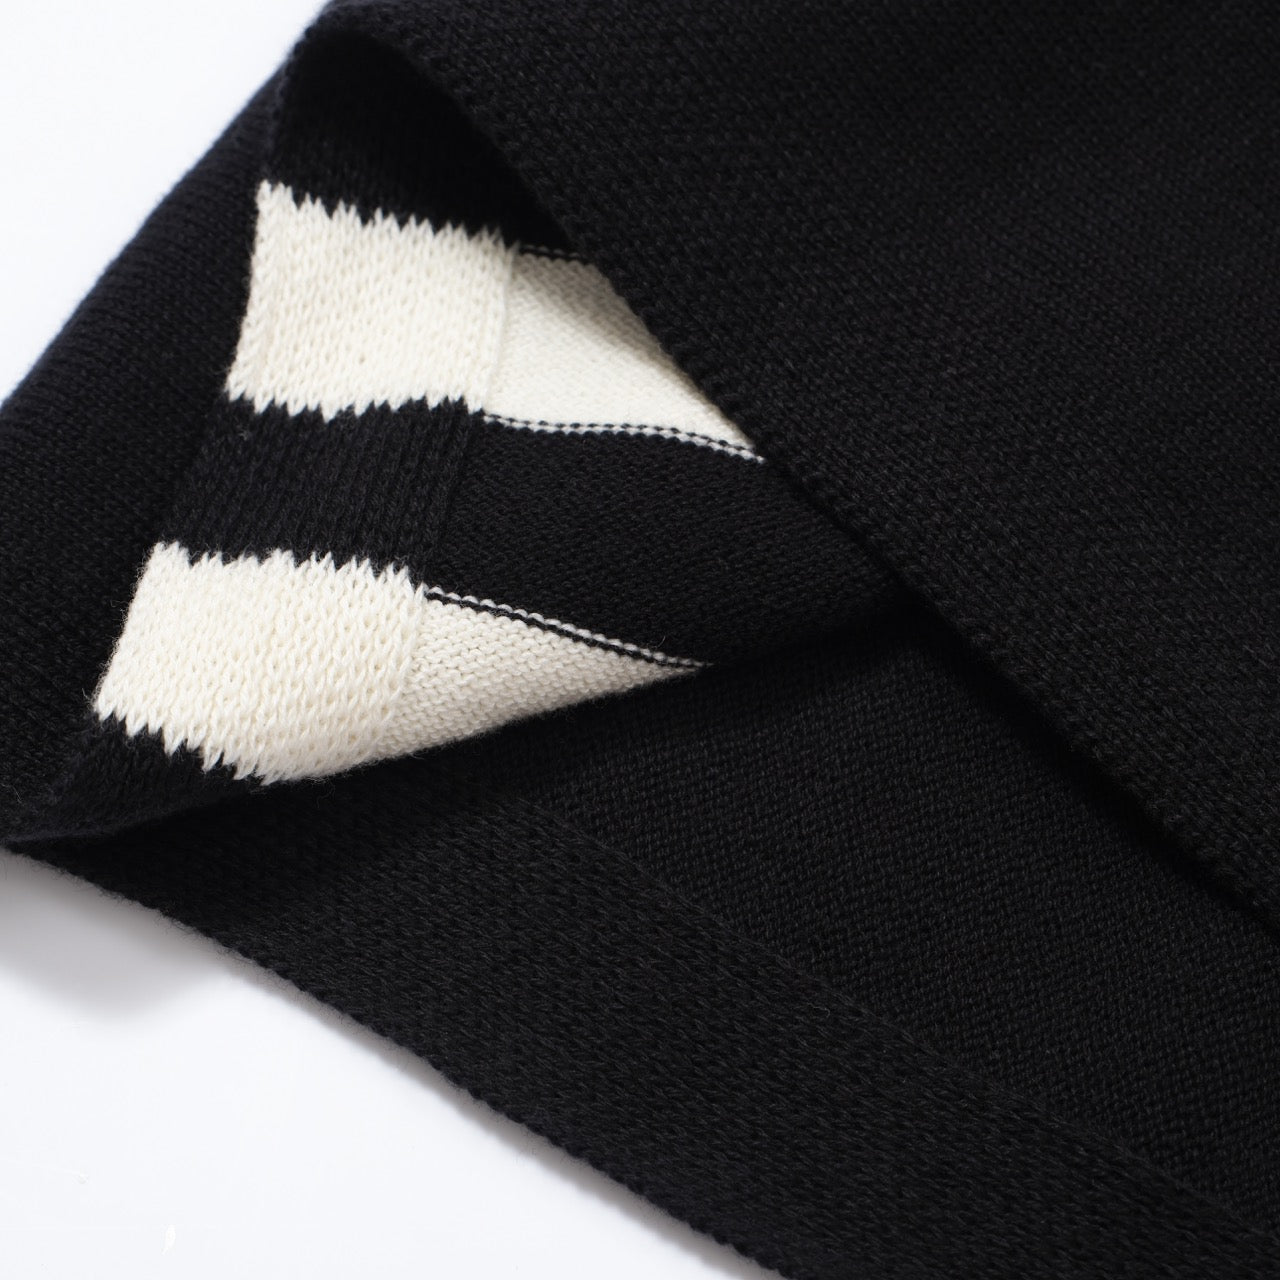 OXKNIT Men Vintage Clothing 1970s Mod Style Casual White Stripe Black Knit Retro Tee